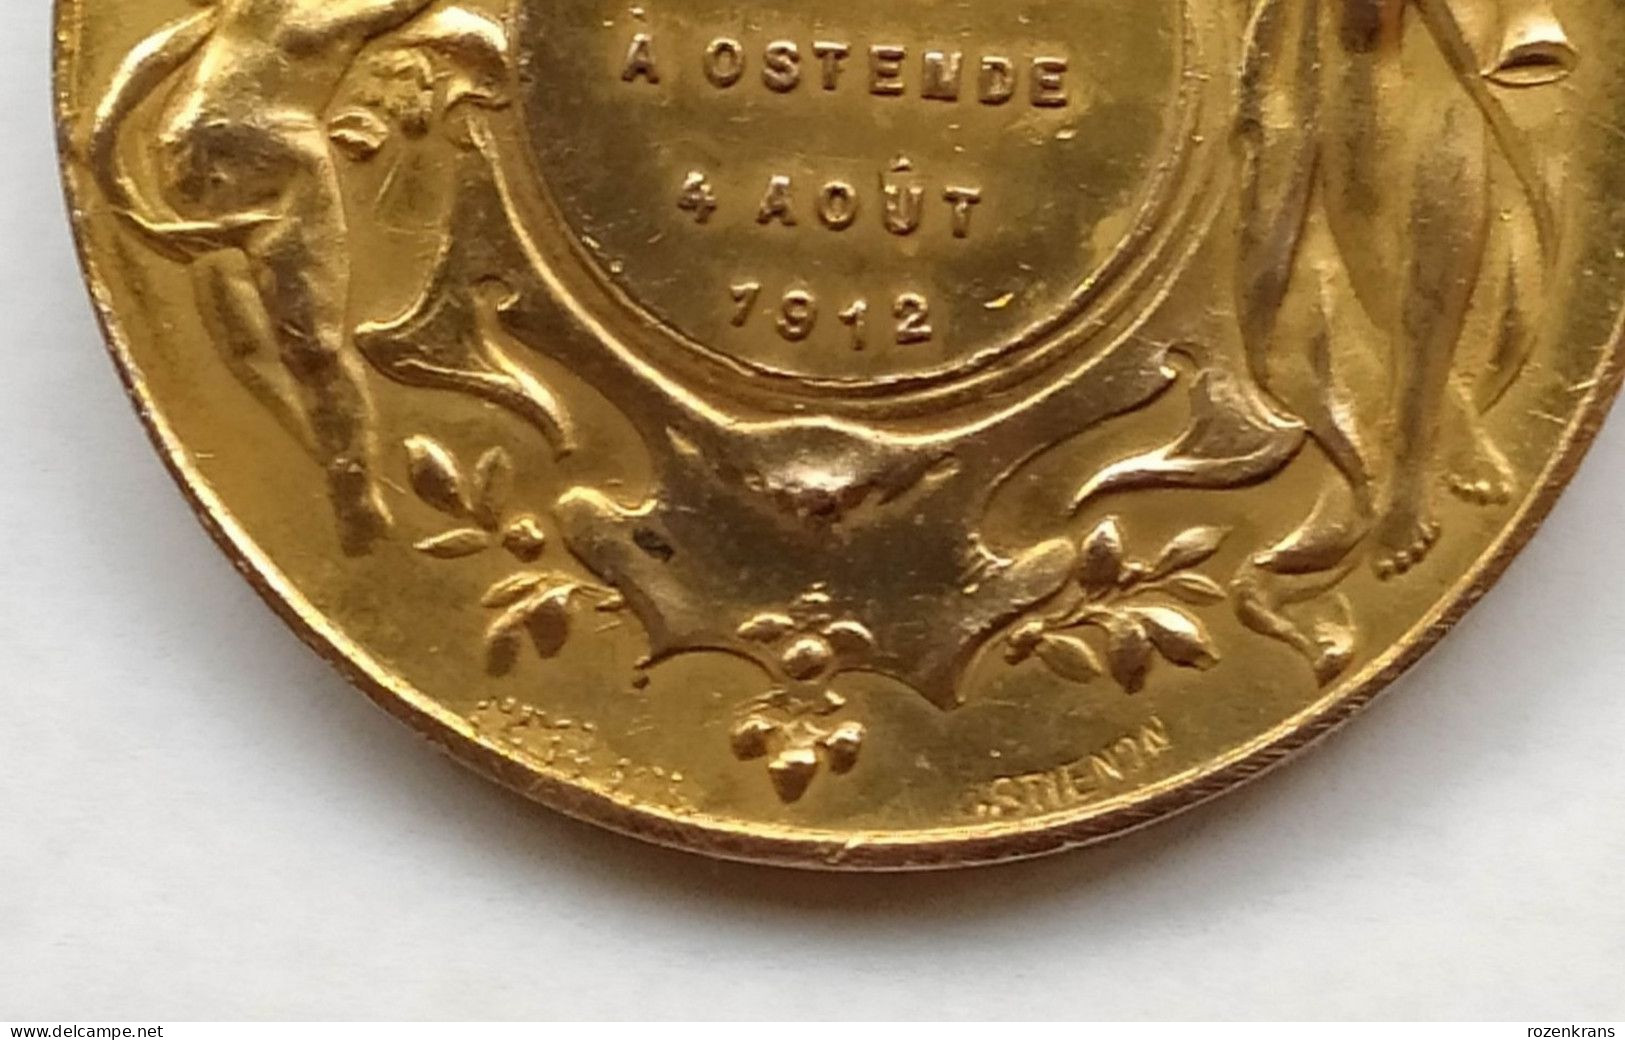 Oude Medaille Oostende Ostende La Royale Legia En Visite 4 Augustus 1912 Ancienne Old Medal Coin - Tokens Of Communes